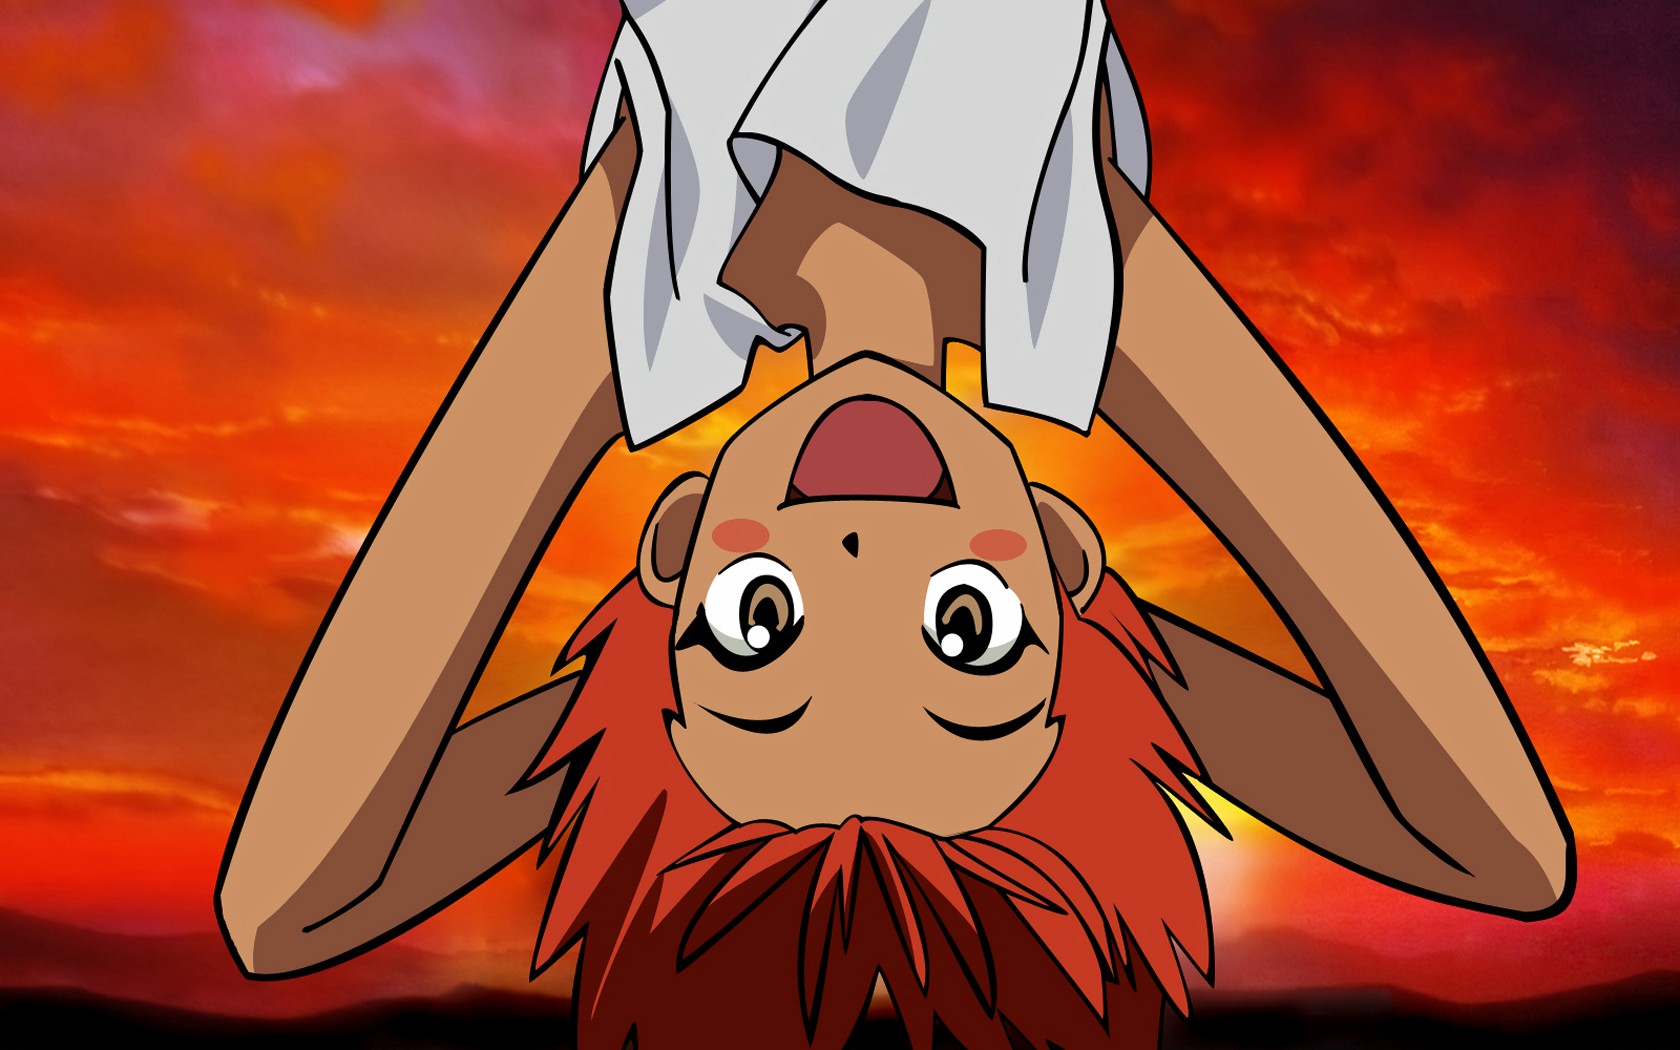 Anime 1680x1050 Cowboy Bebop Edward (Cowboy Bebop) anime redhead upside down open mouth orange sky anime boys